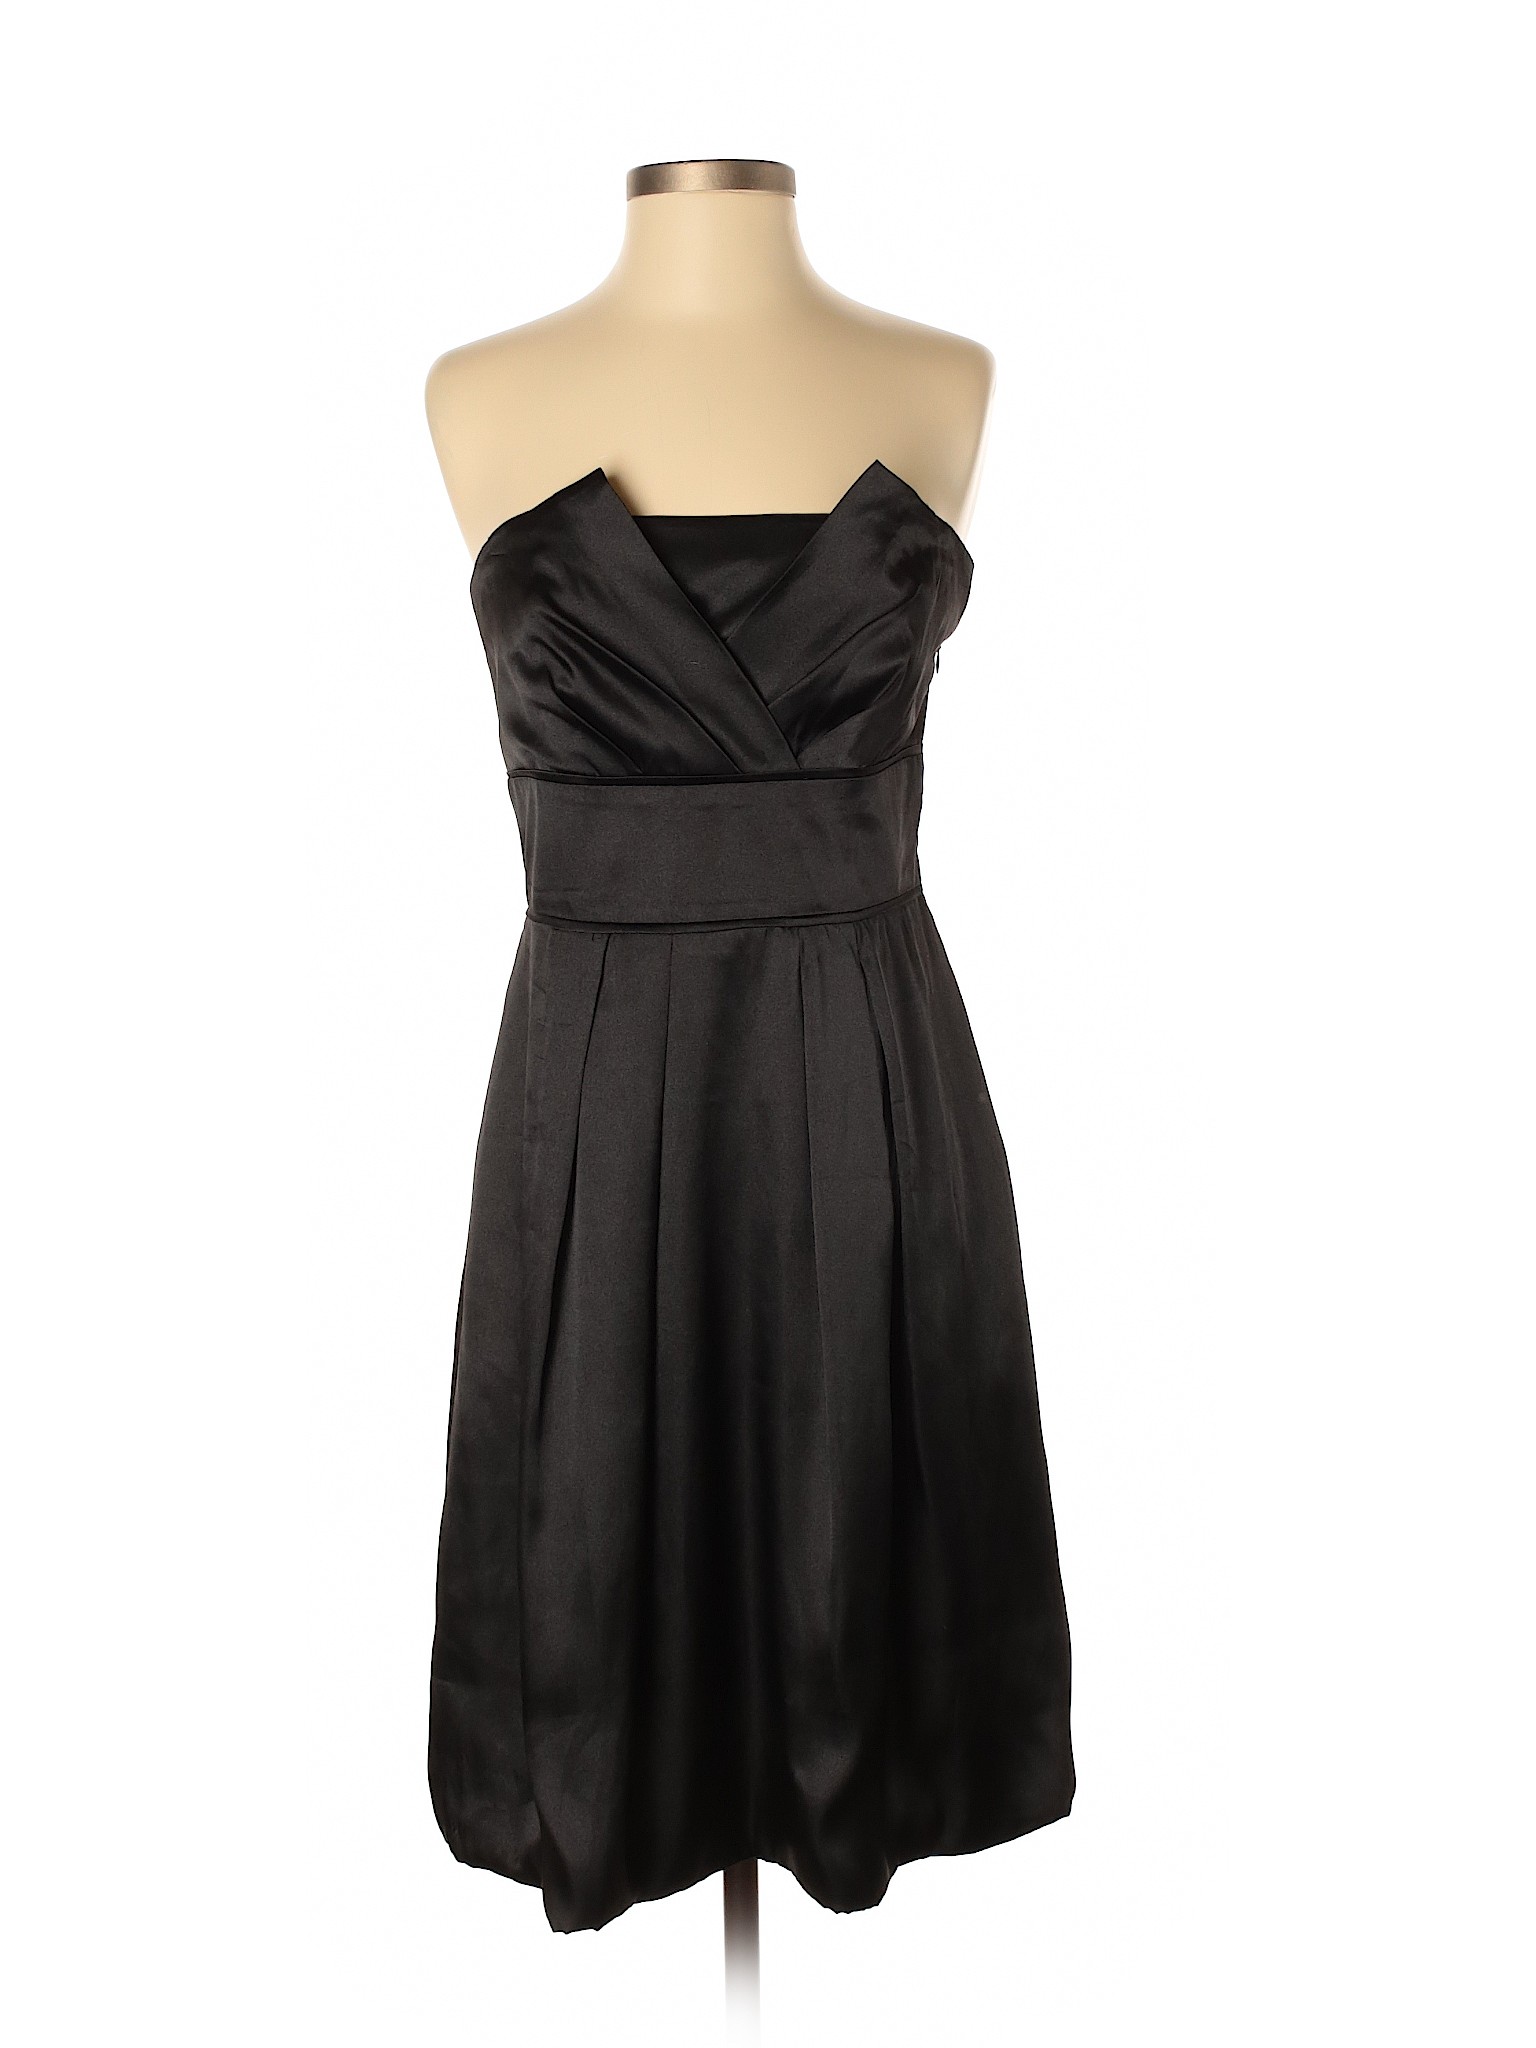 White House Black Market Women Black Casual Dress 4 | eBay